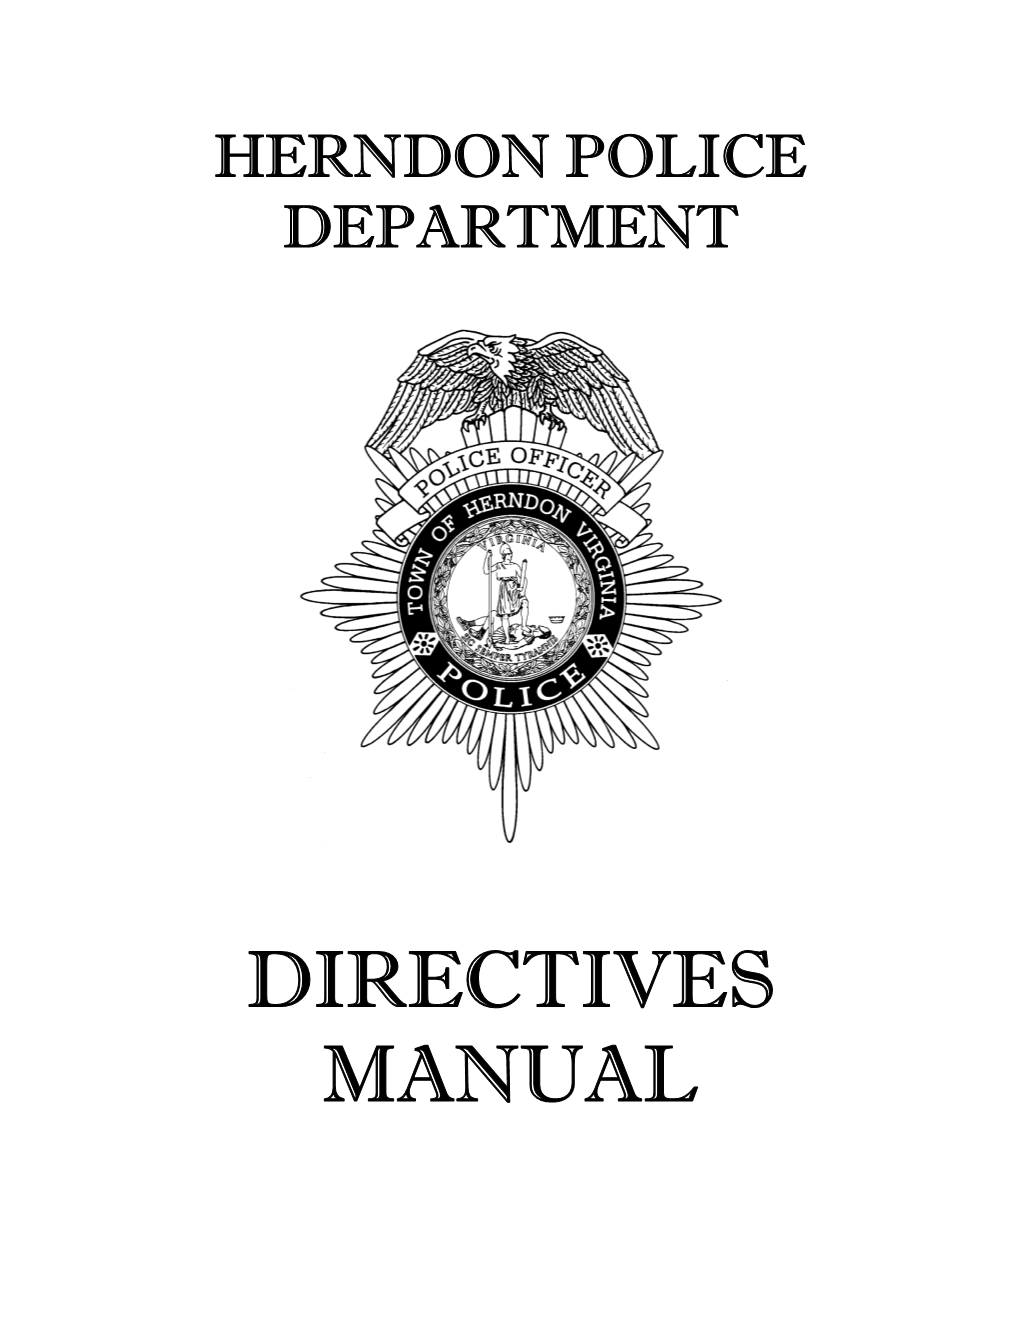 Directives Manual